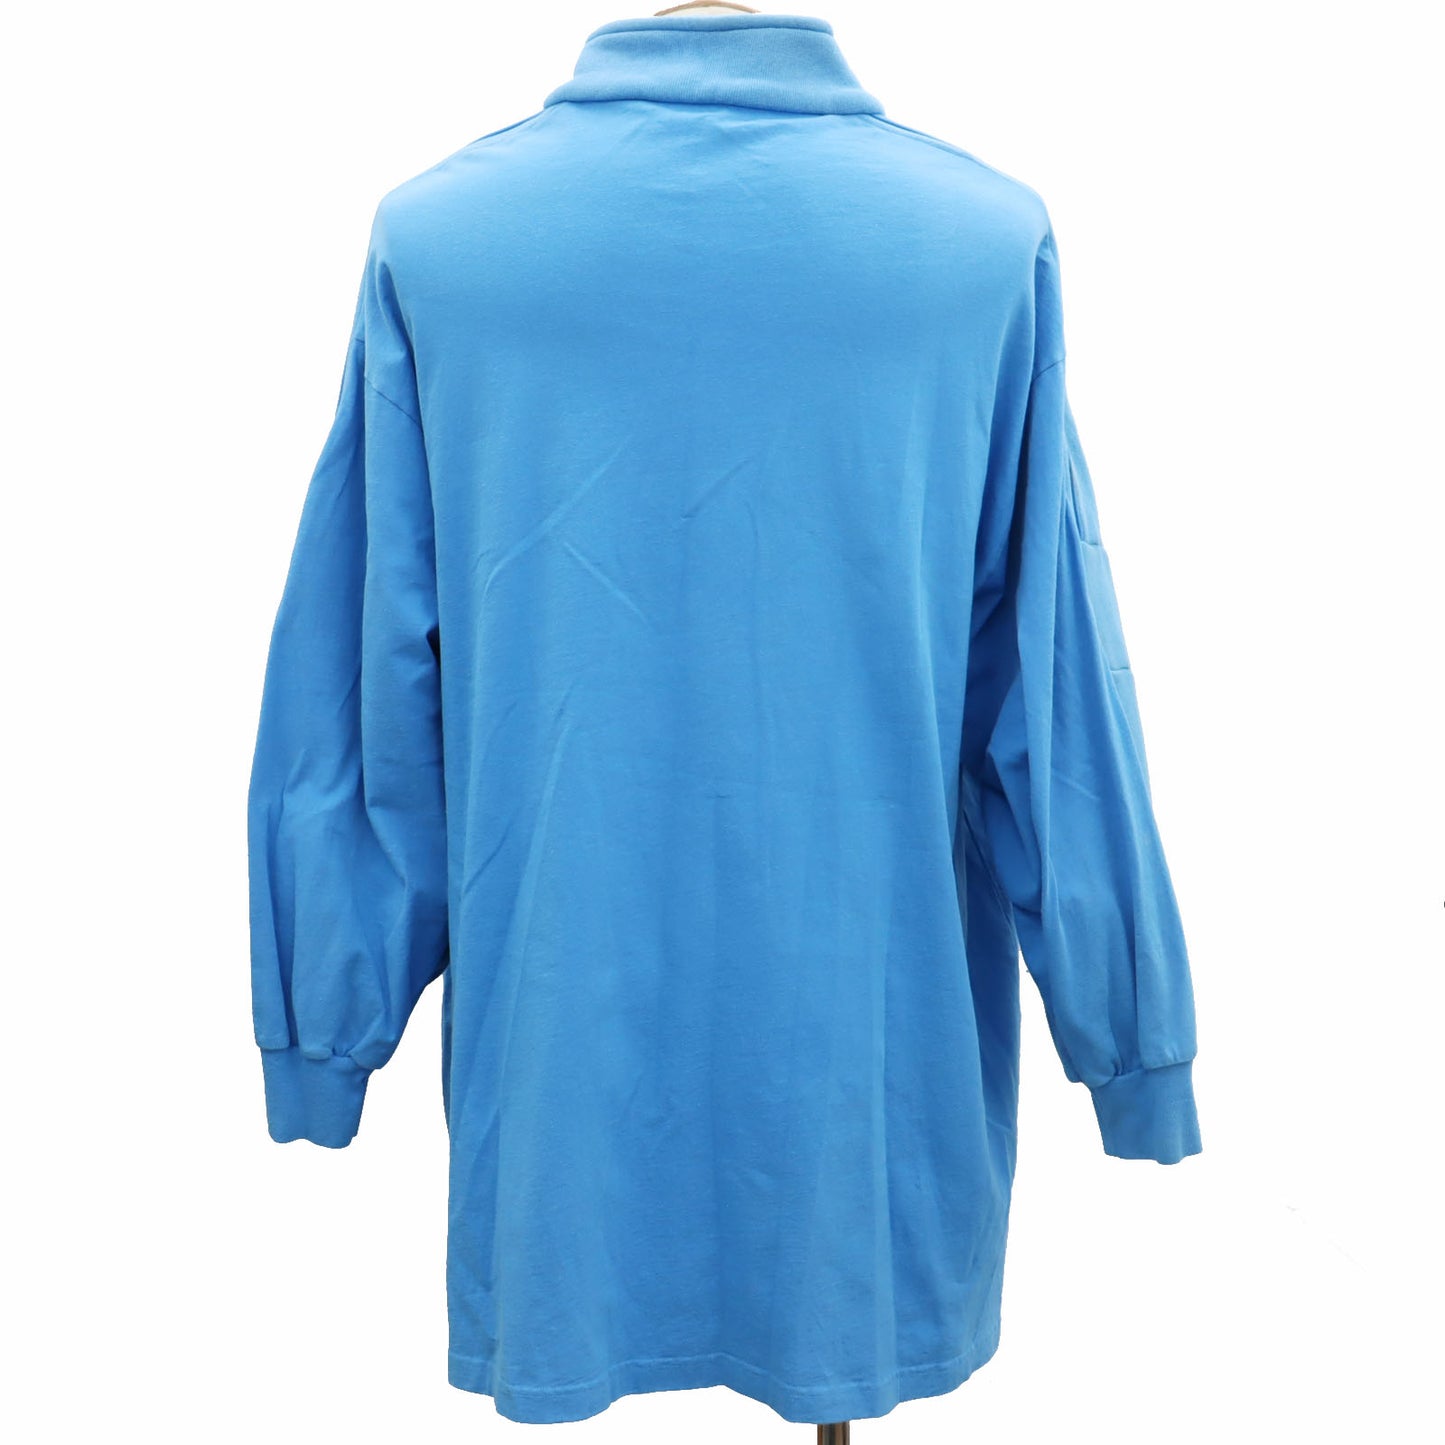 BALENCIAGA Flag Logo Long Sleeve Shirt Tops Light Blue #AH530